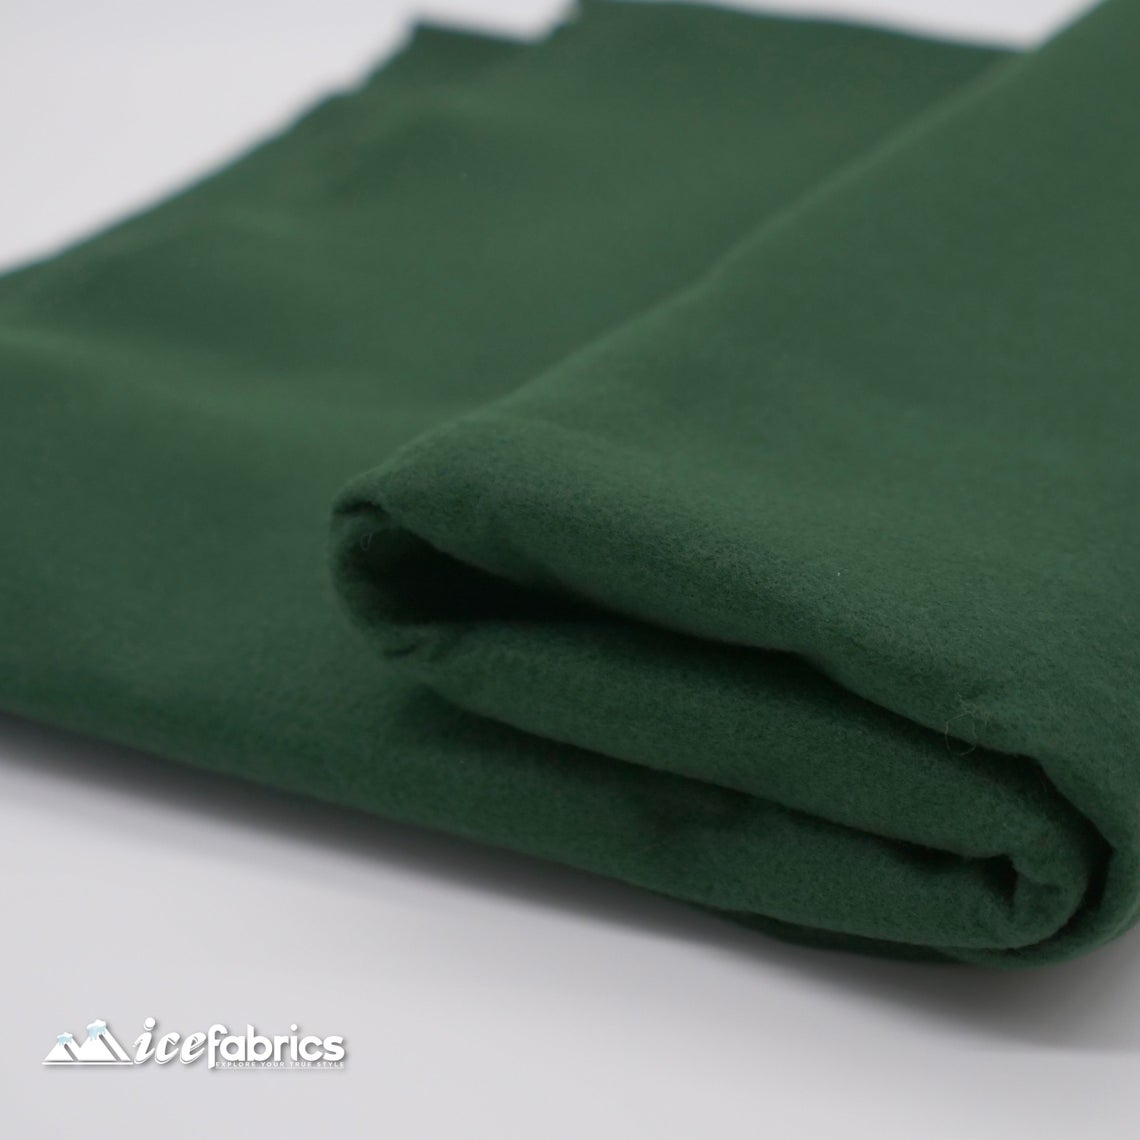 Acrylic Felt Fabric By The Roll | 20 yards | Wholesale Fabric ICE FABRICS Hunter Green